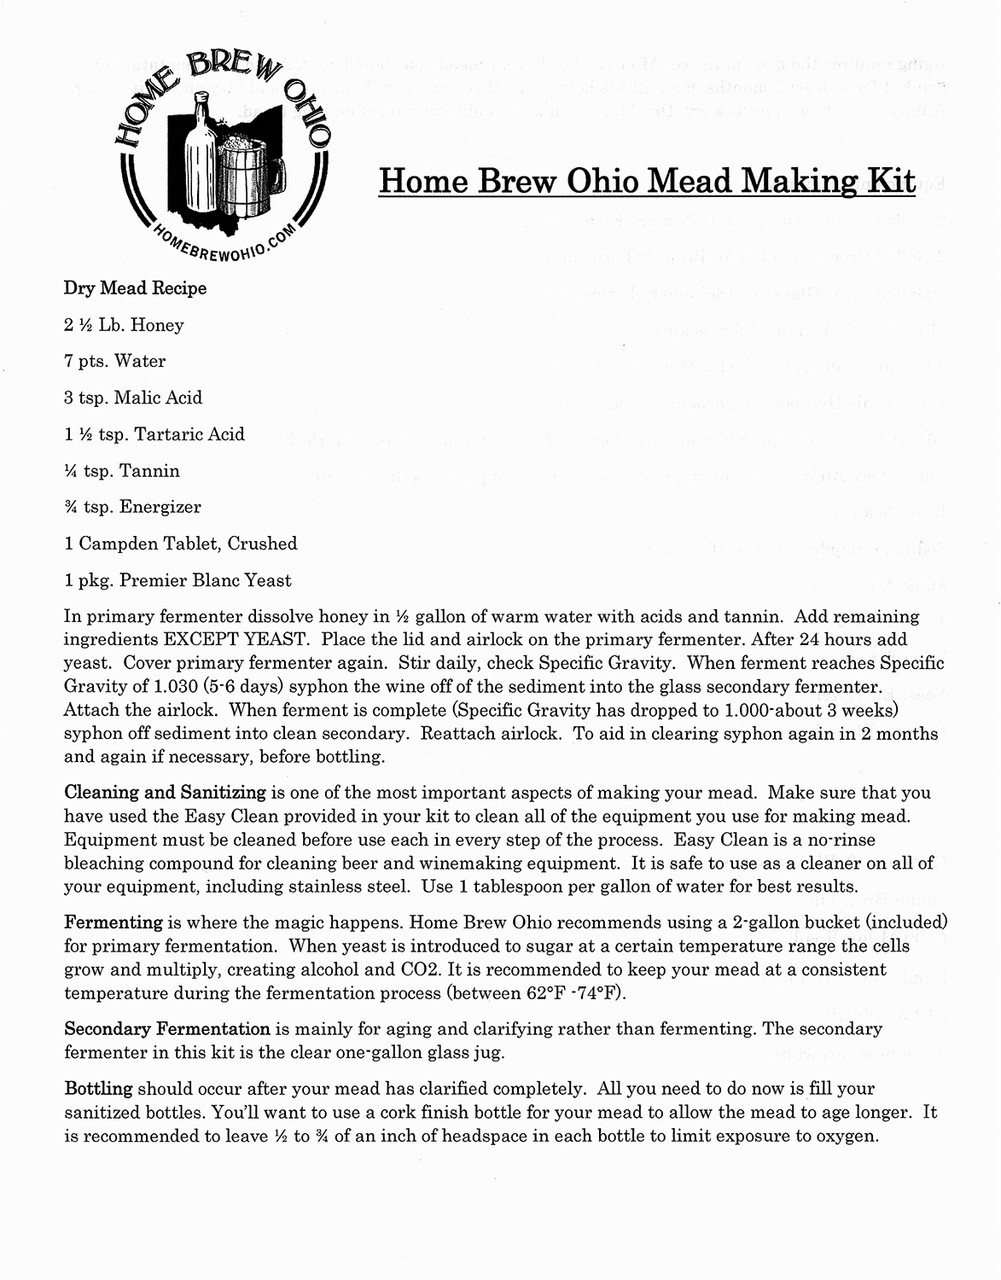 Home Brew Ohio Mead Making Kit - Home Brew Ohio